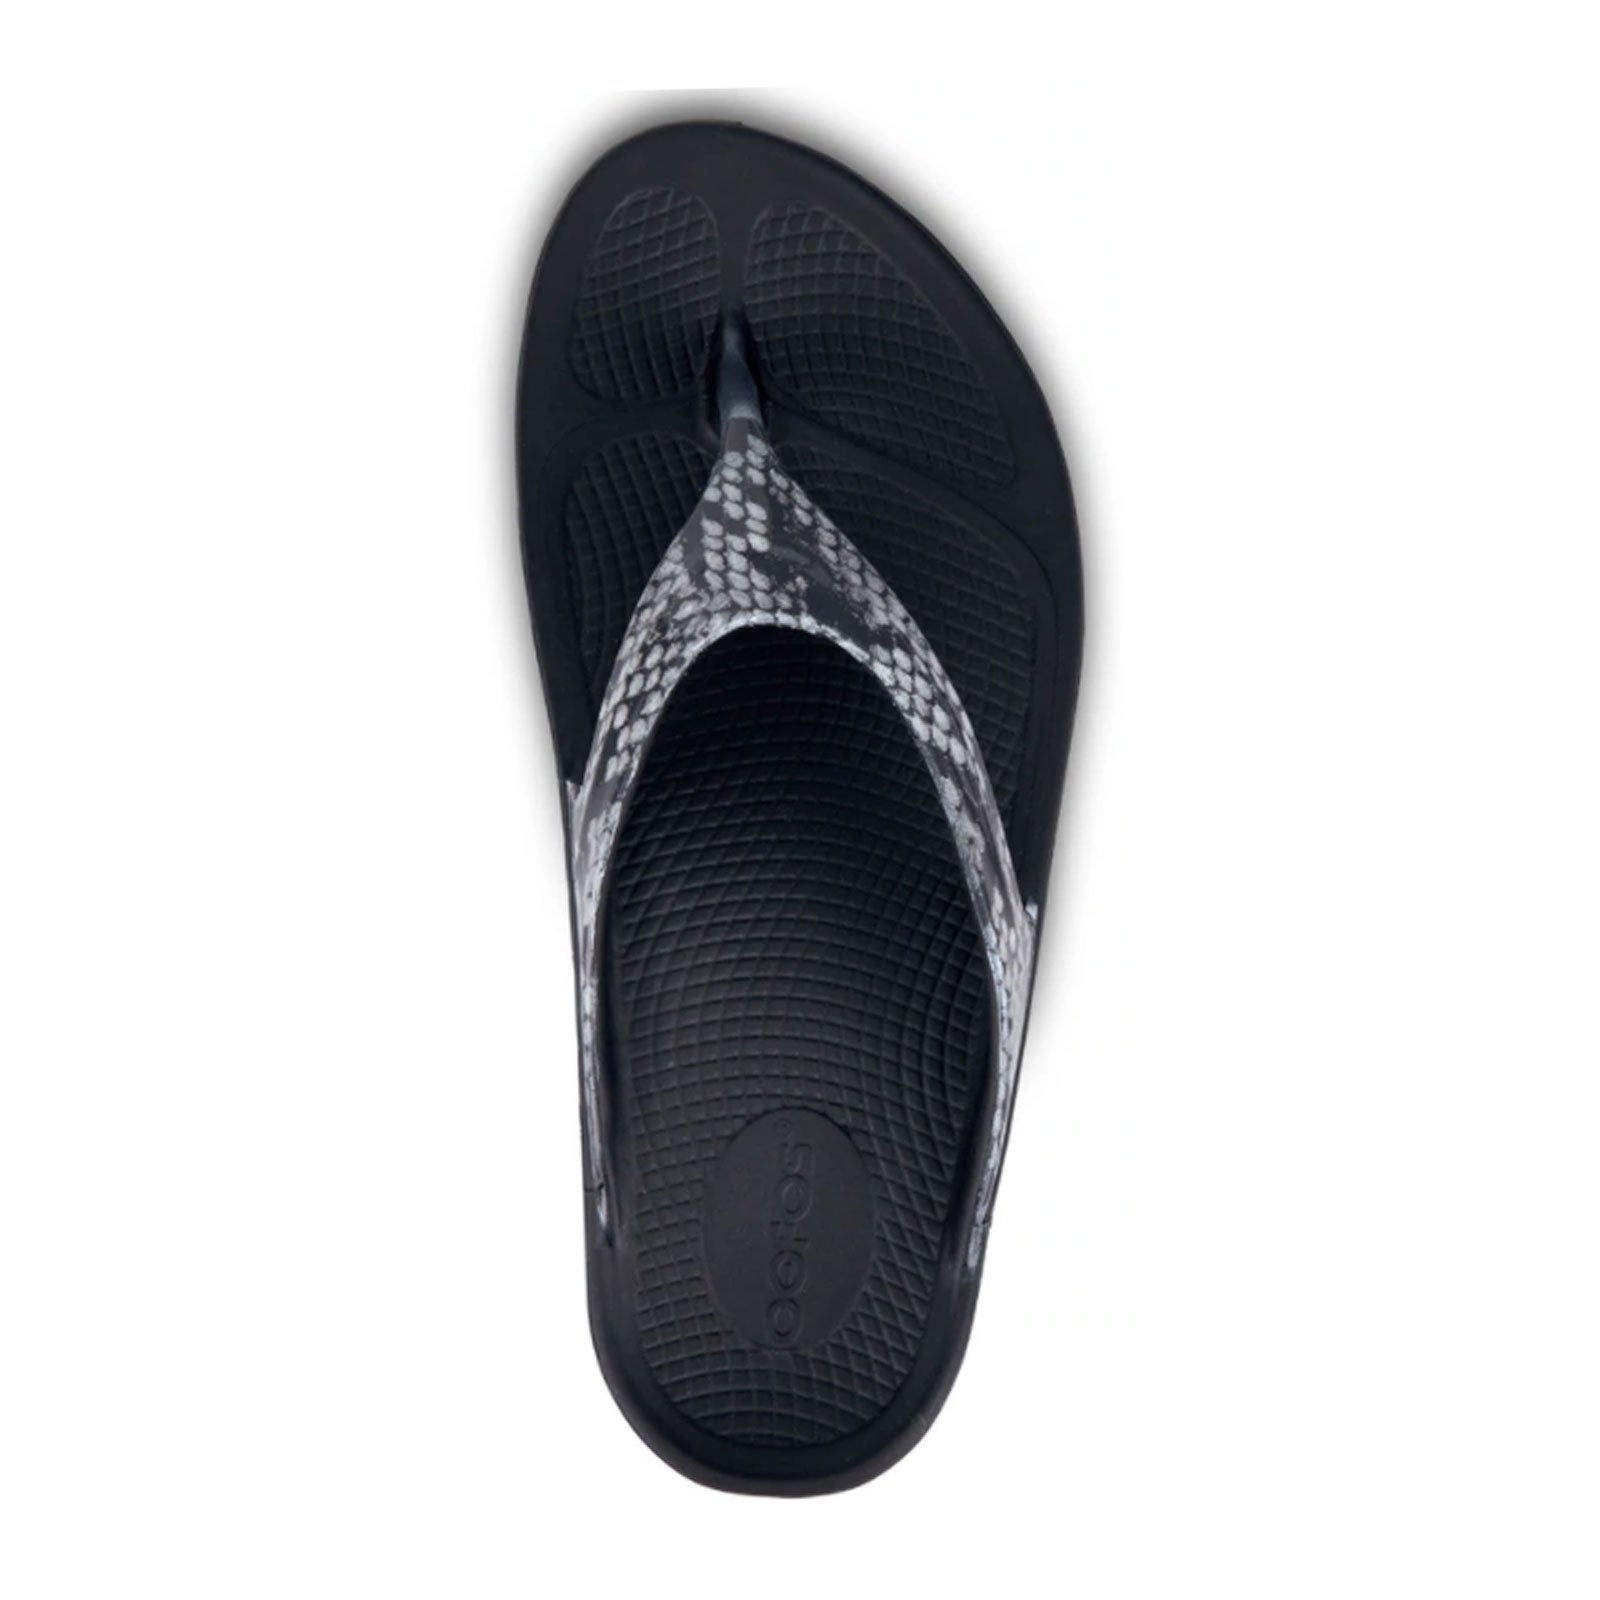 Oofos OOlala Limited Thong (Women) - Black/Snake - The Heel Shoe 